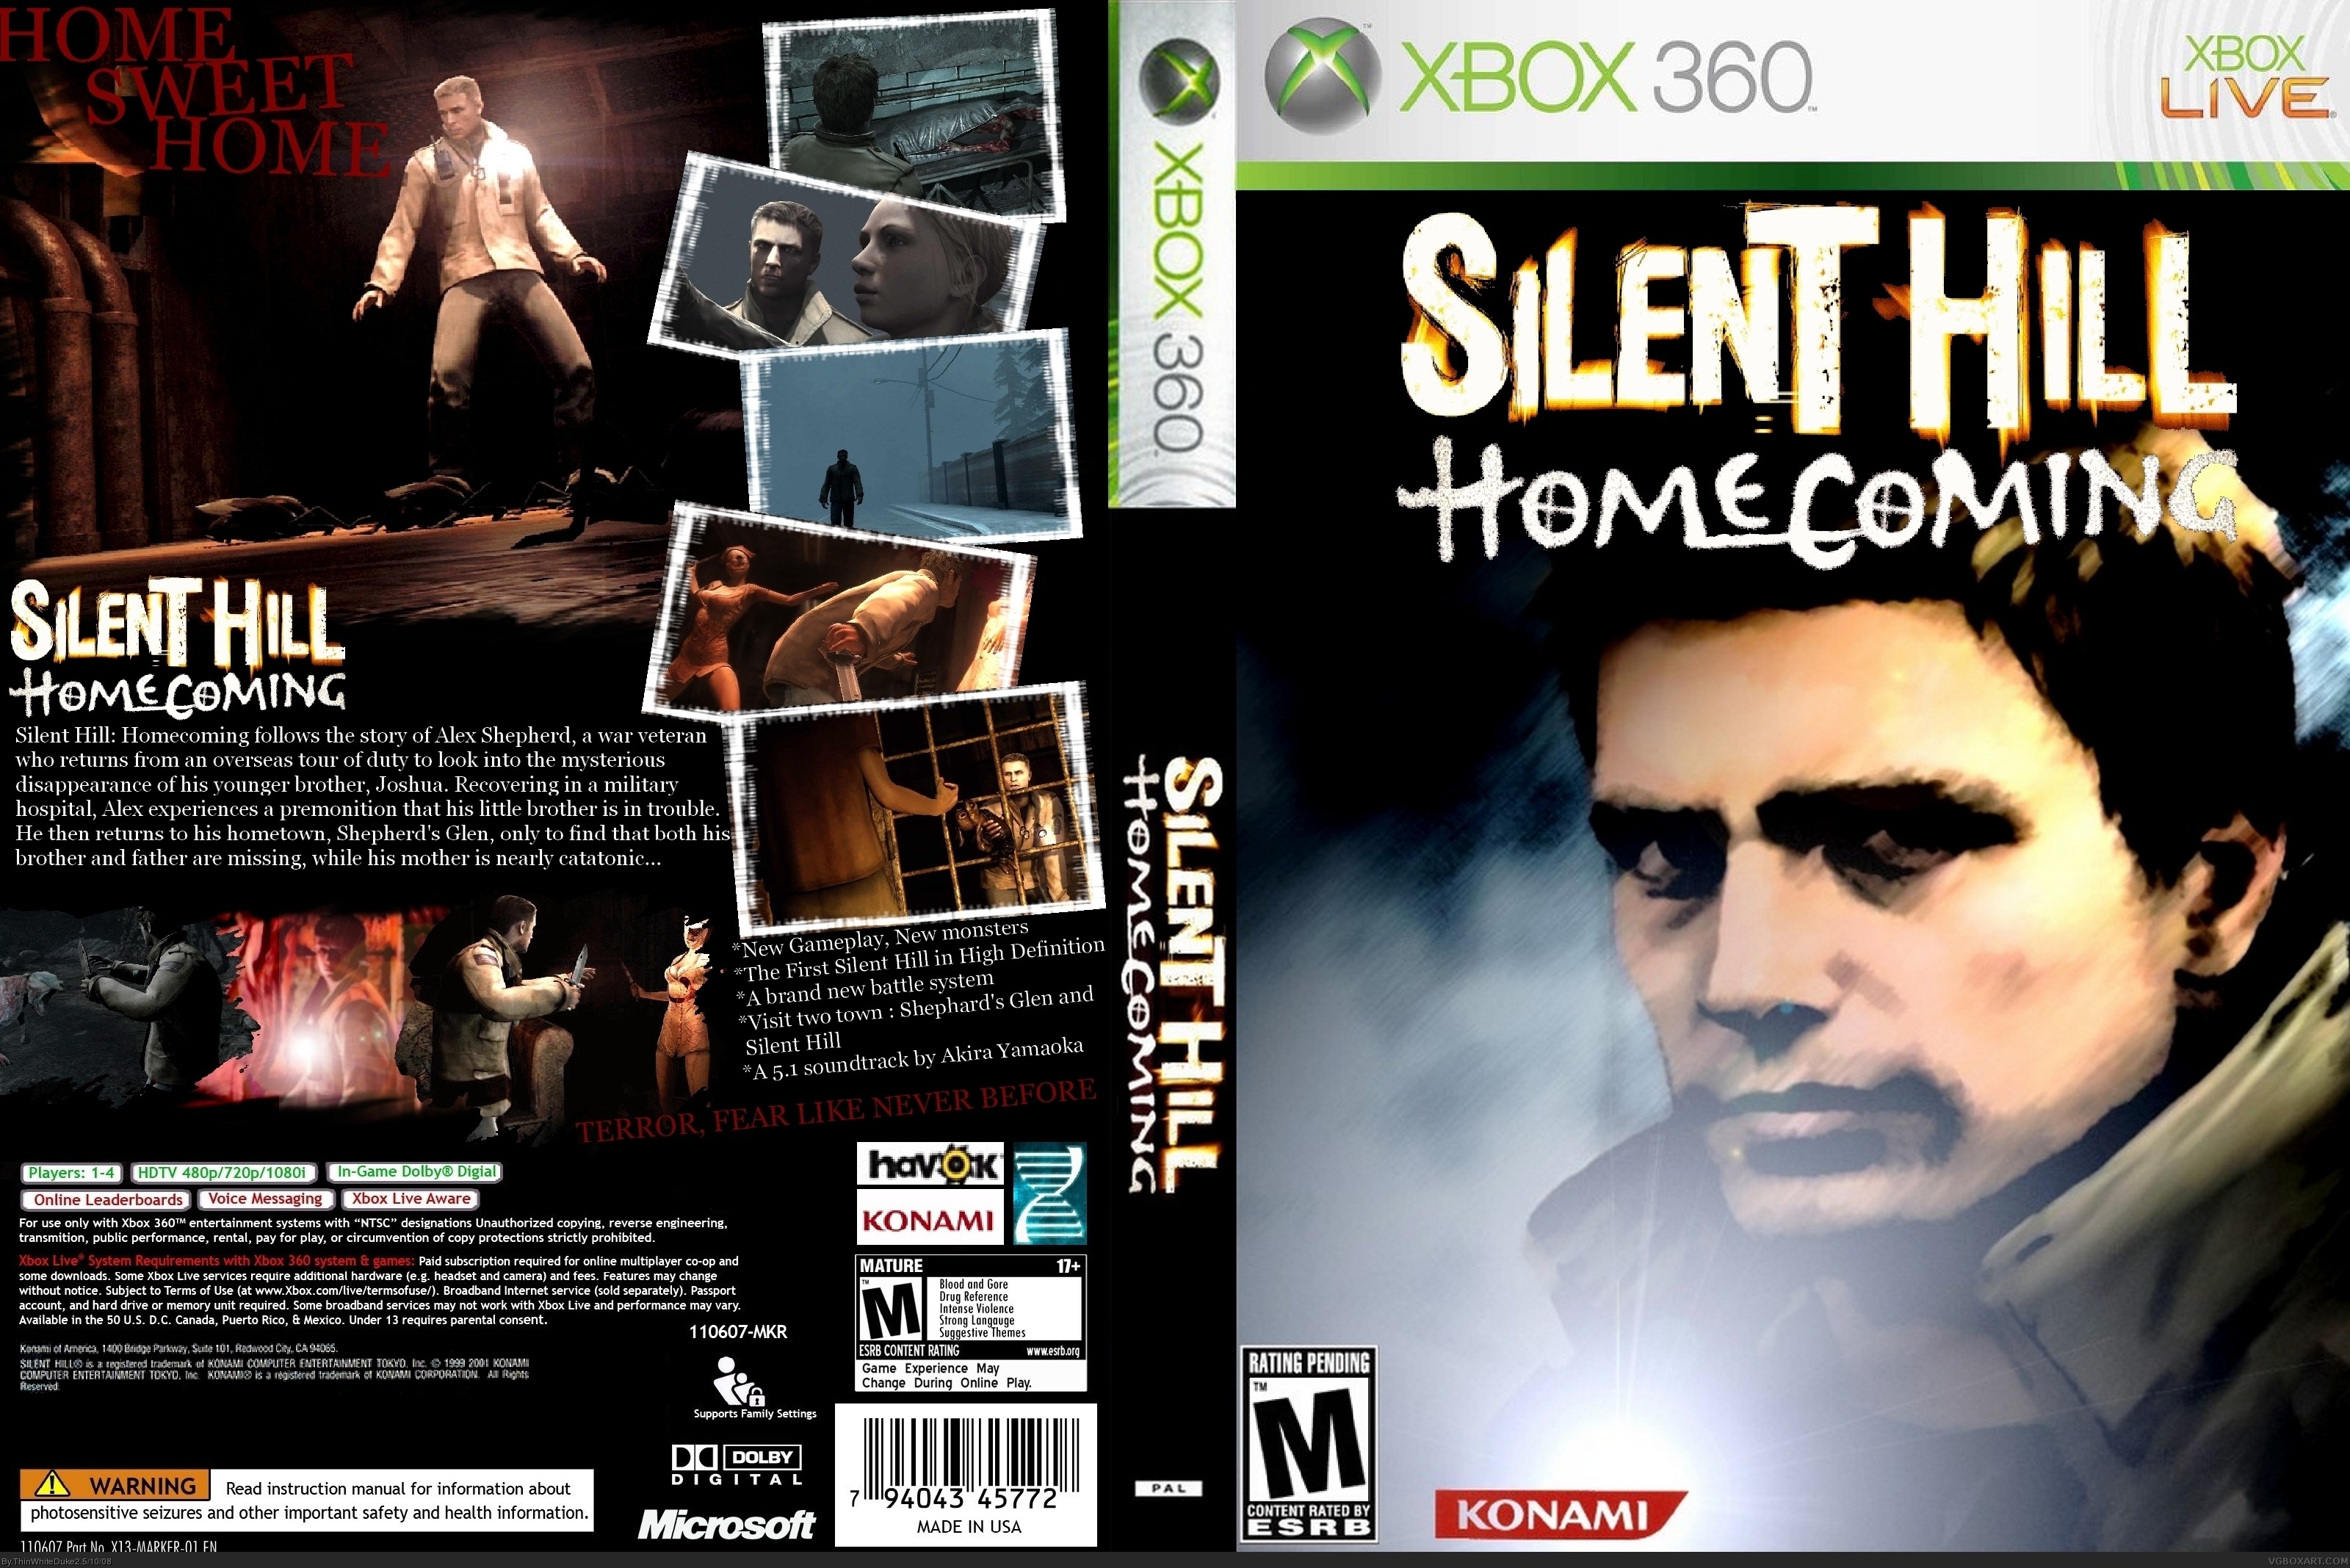 Silent Hill 5 box cover